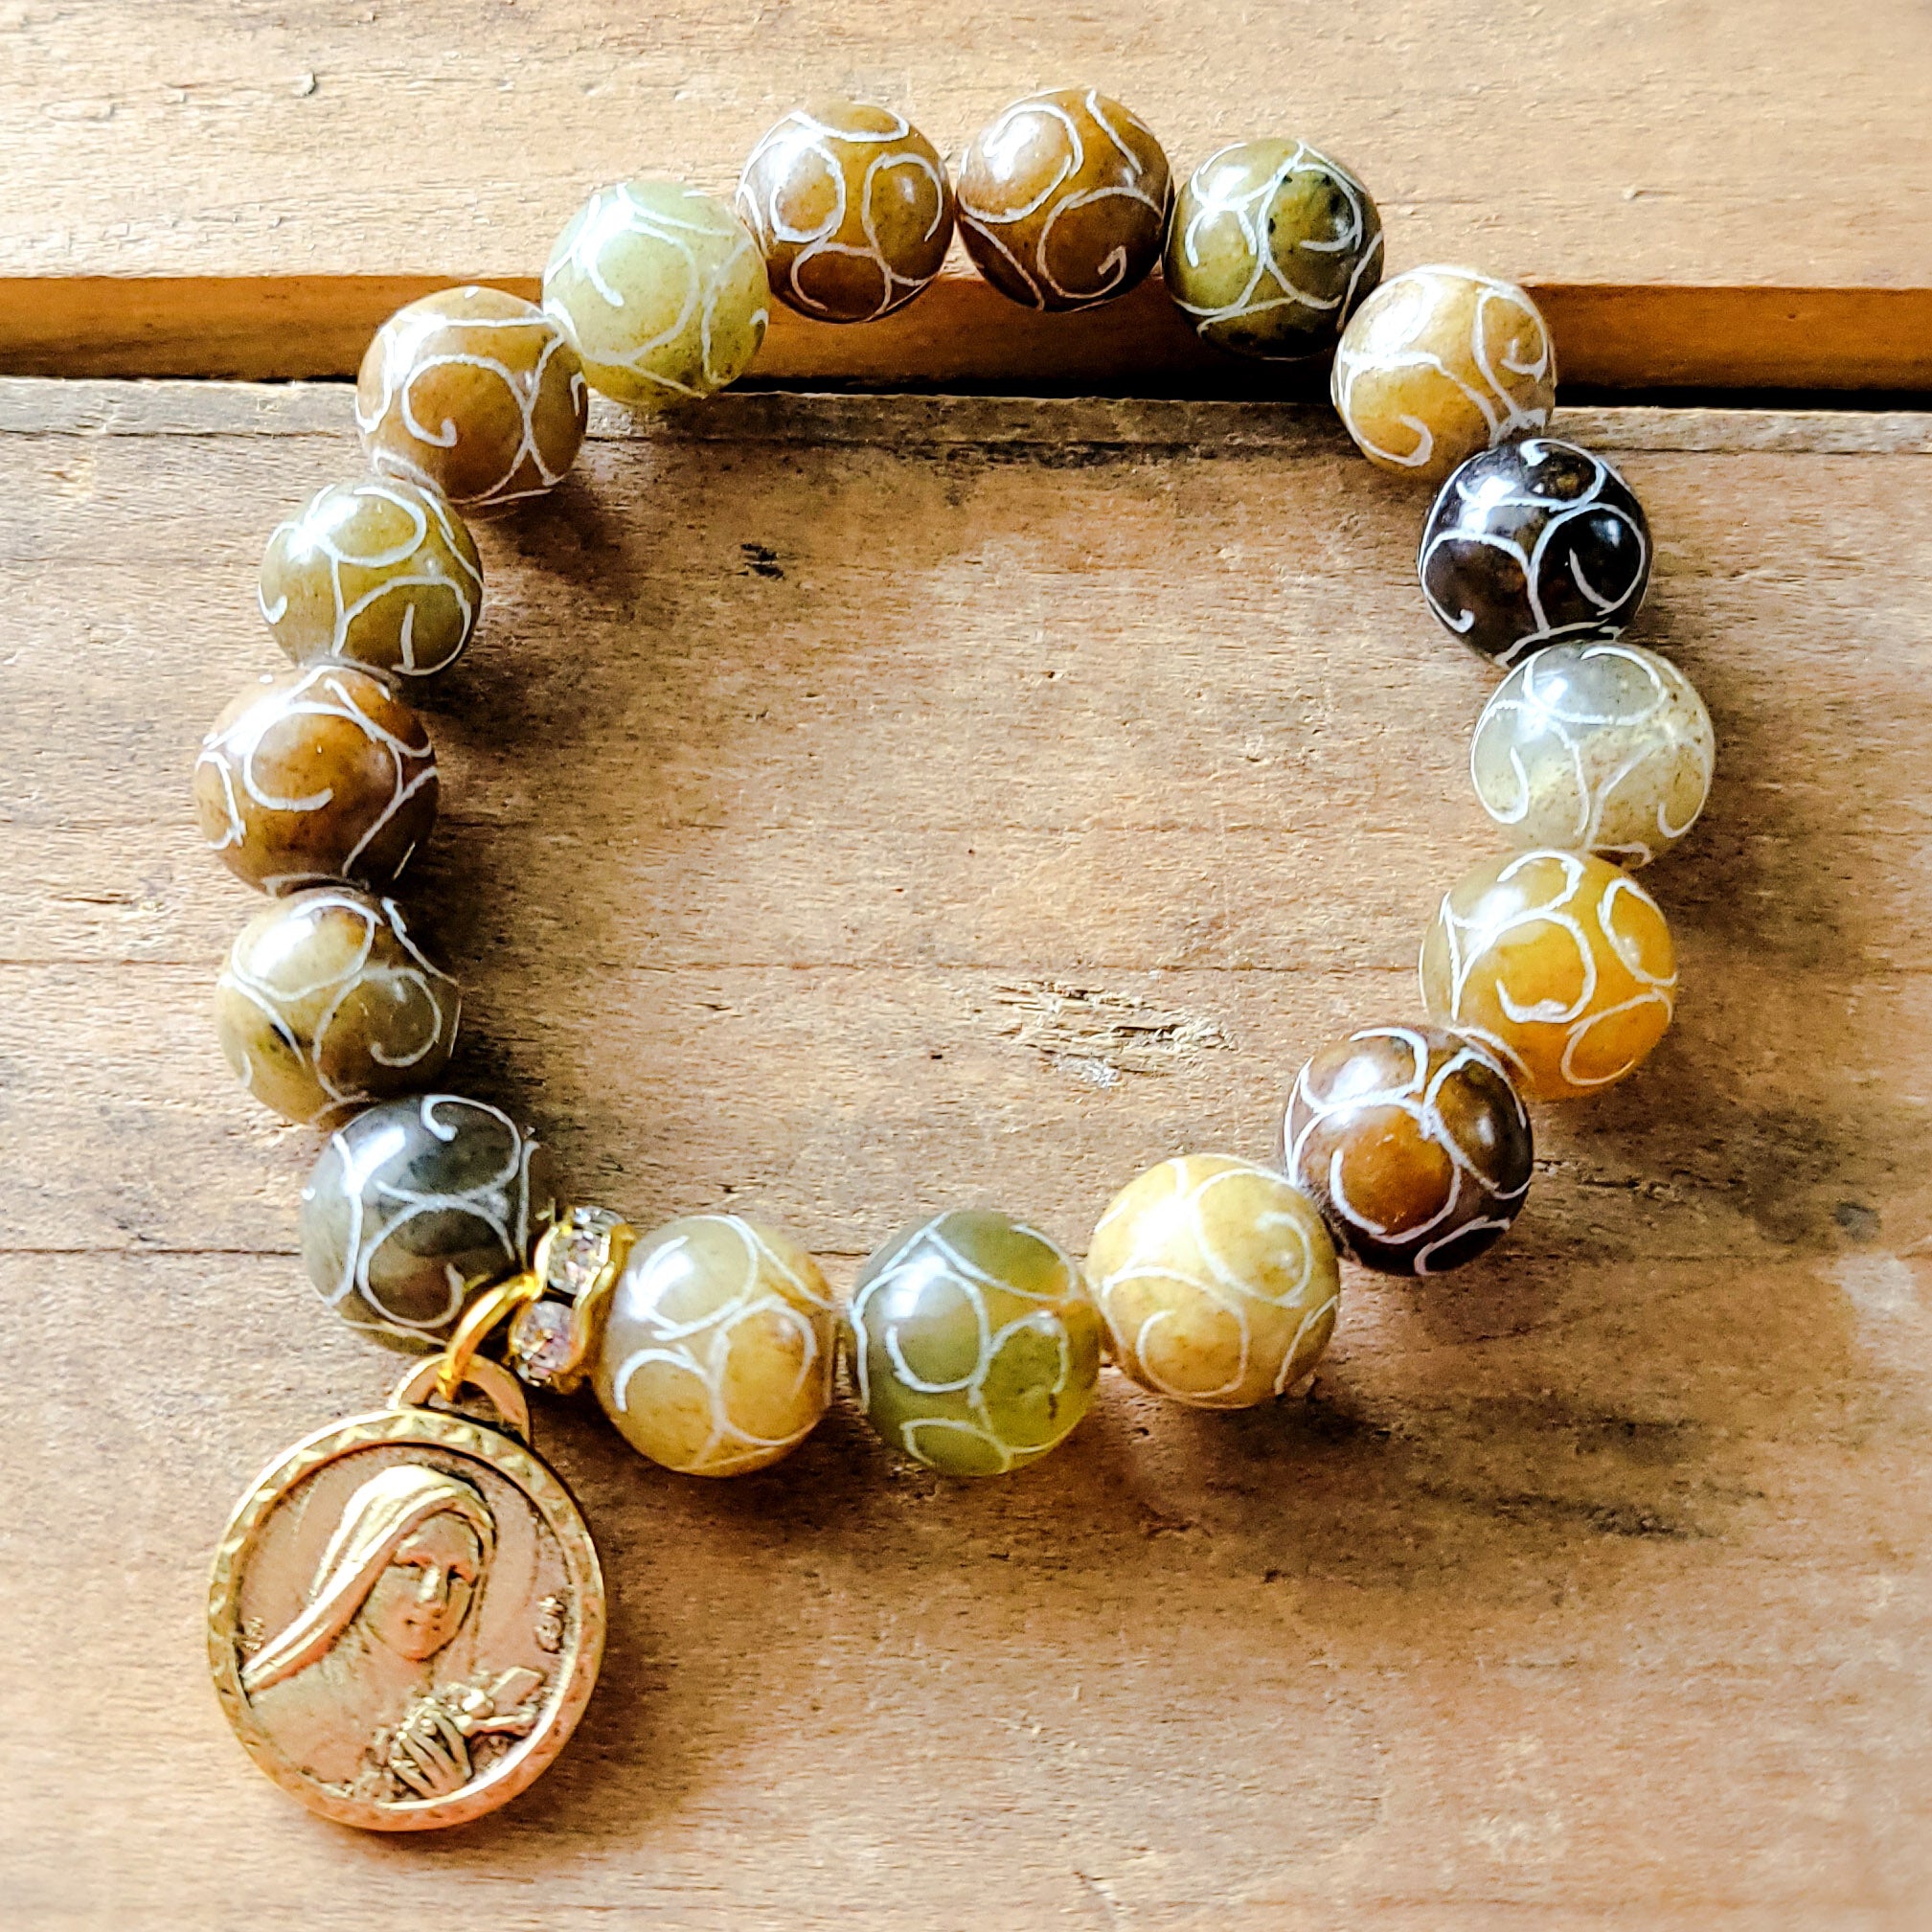 12mm swirled tan agate beads w gold tone 1" round St. Theresa Little Flower bracelet